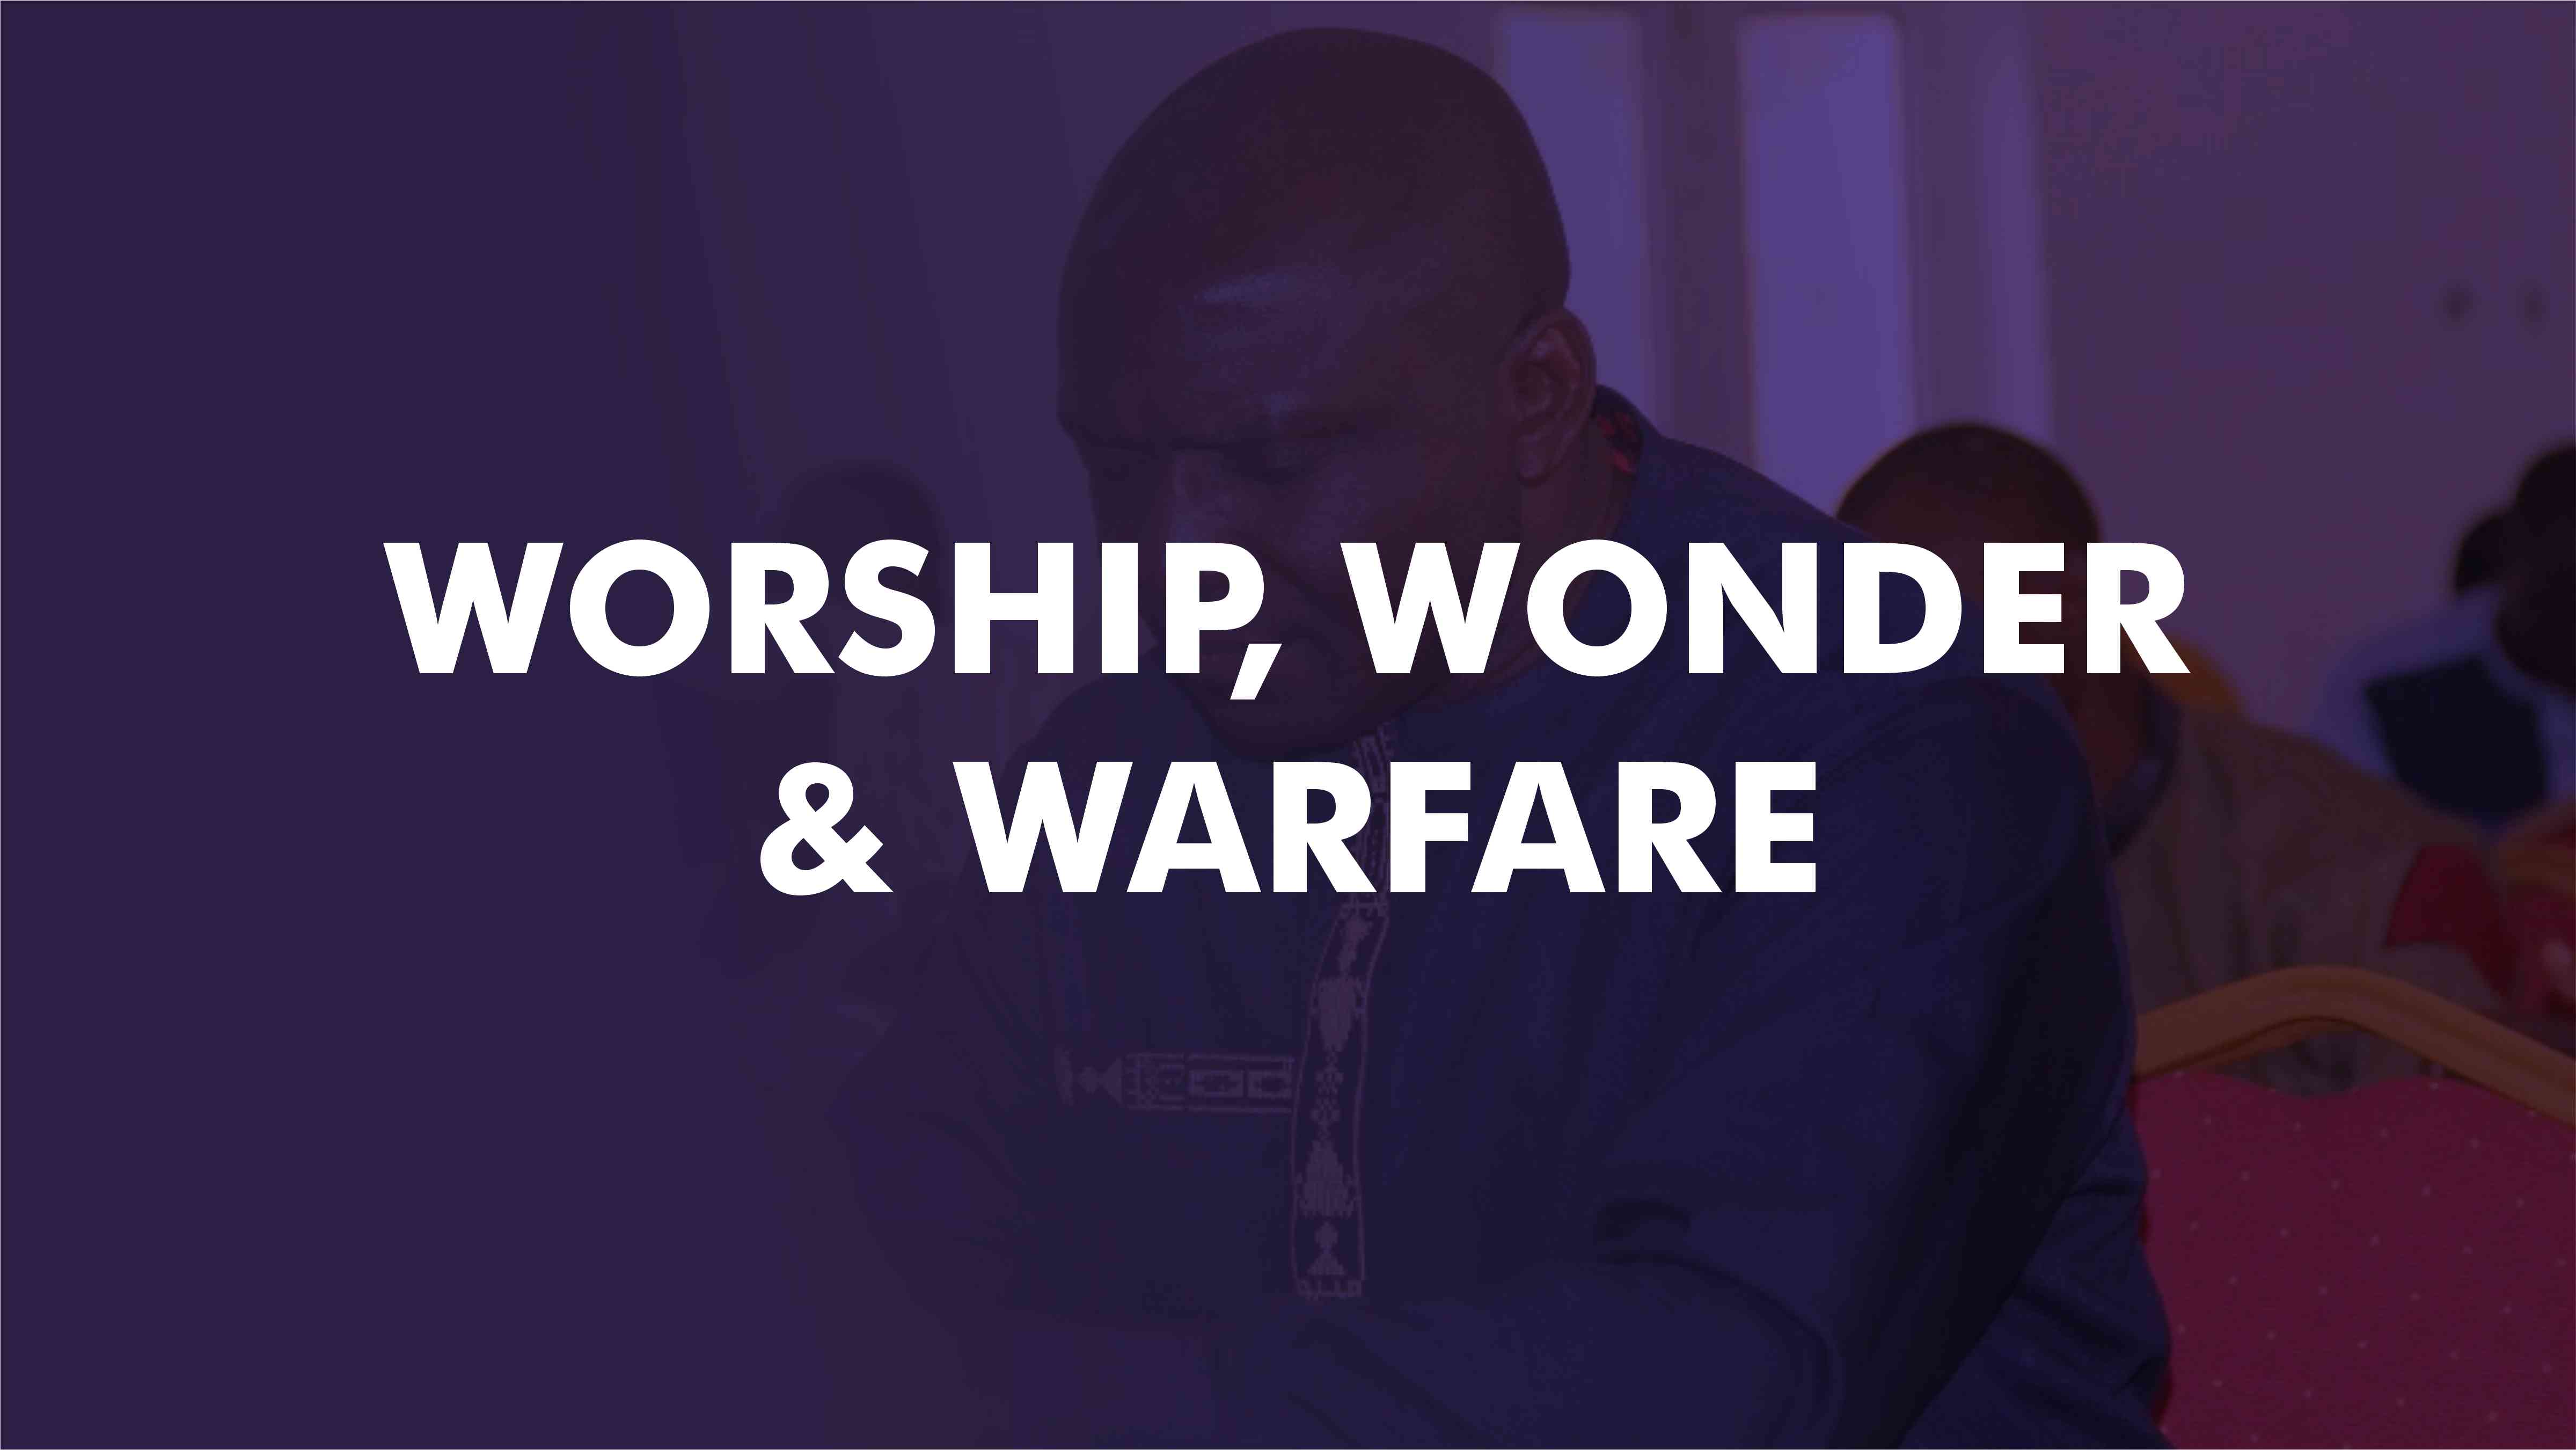 Worship, Wonder and Warfare (WWW)